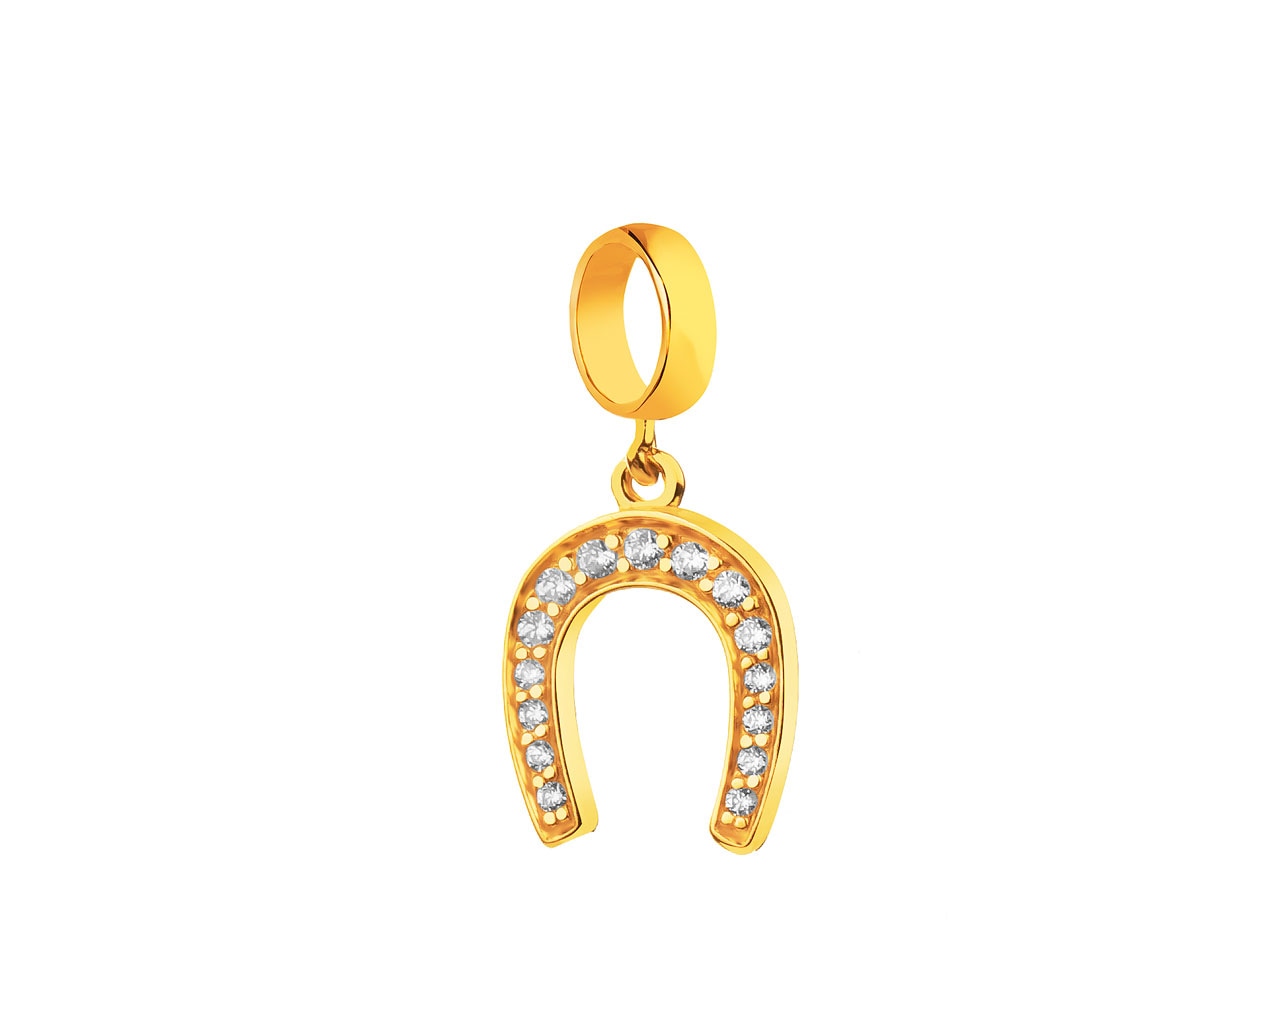 Yellow Gold Beads Pendant with Cubic Zirconia - Horseshoe